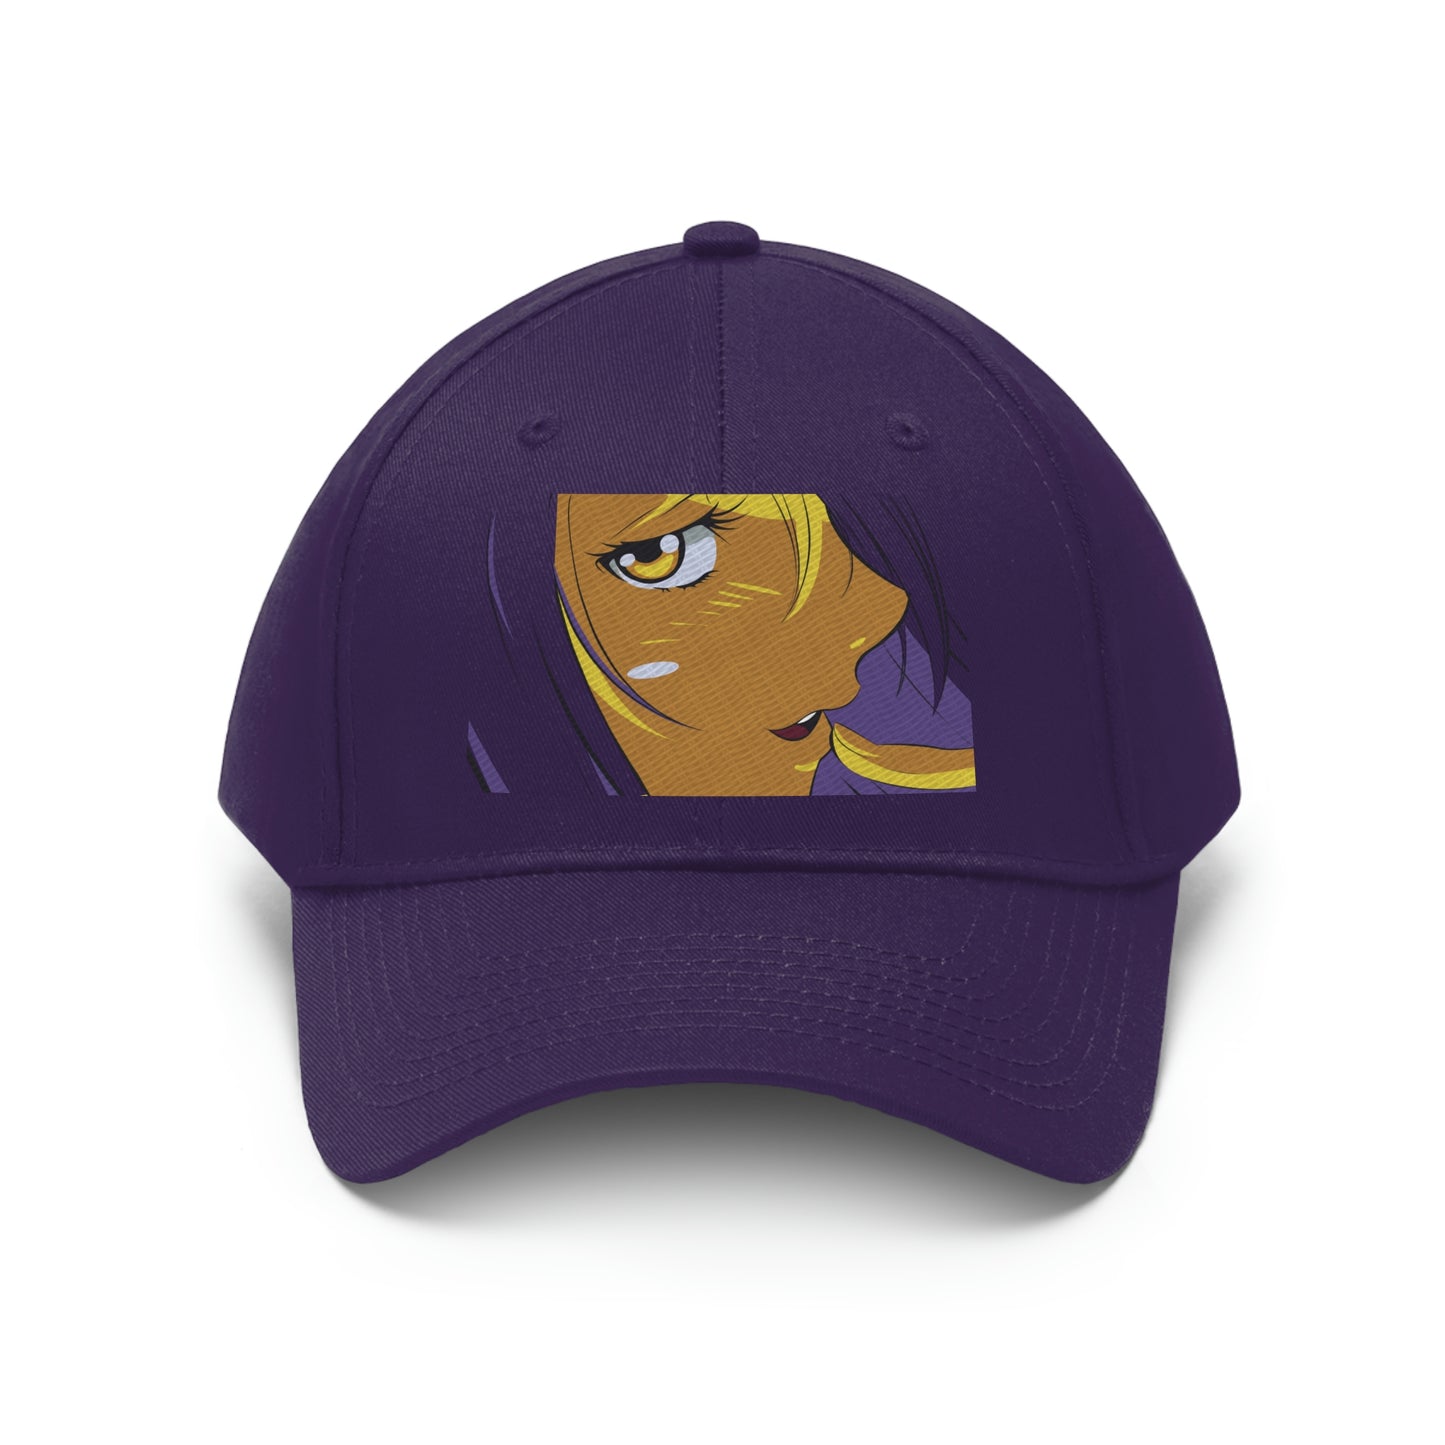 Ca' Version 2 Hat